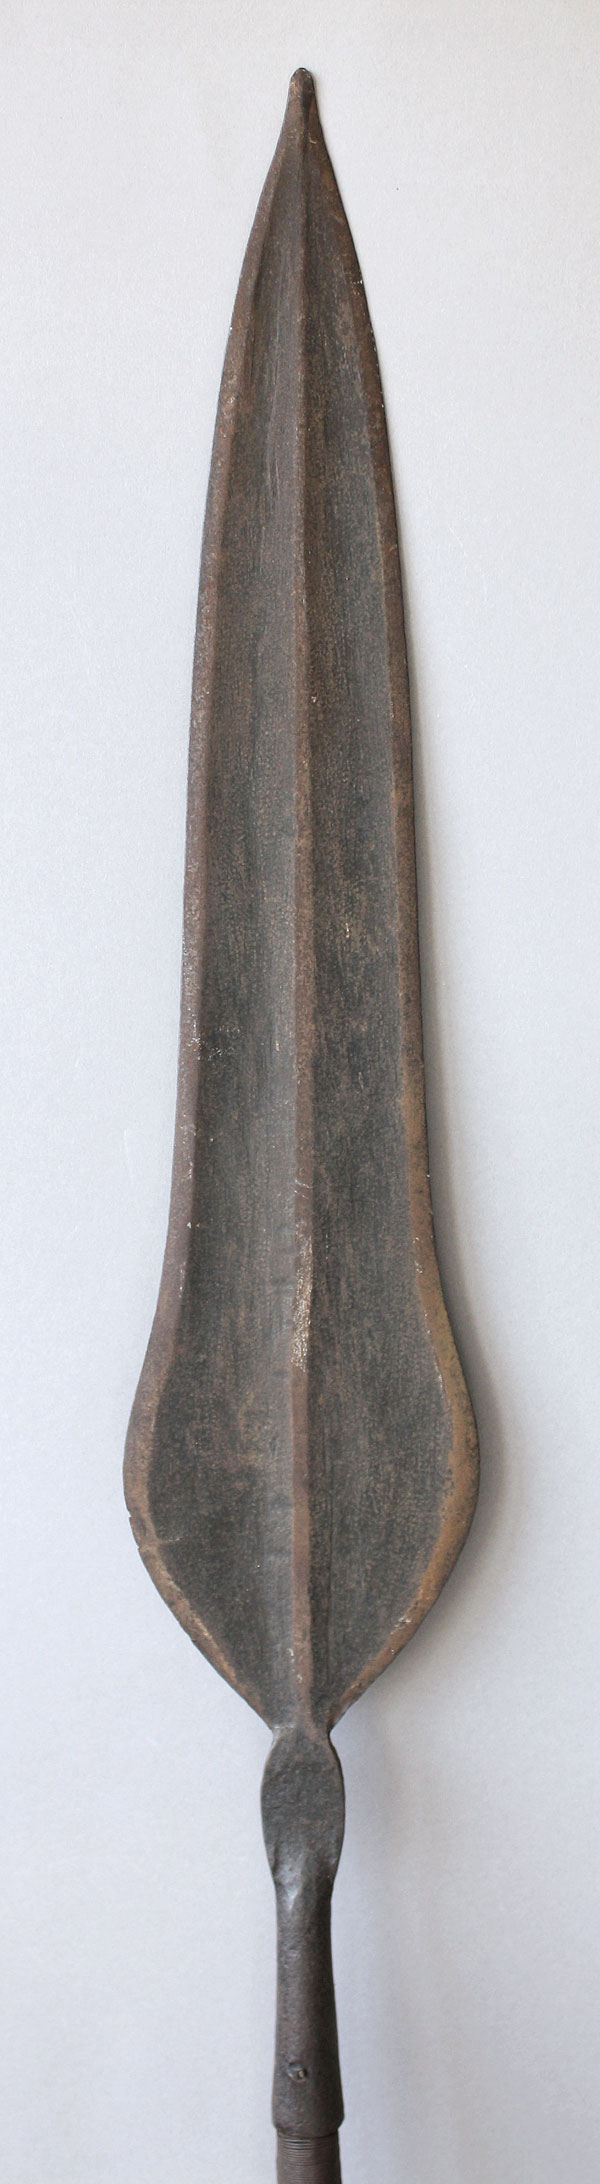 Bakuba Spear with bell Kongo Congo African Art C